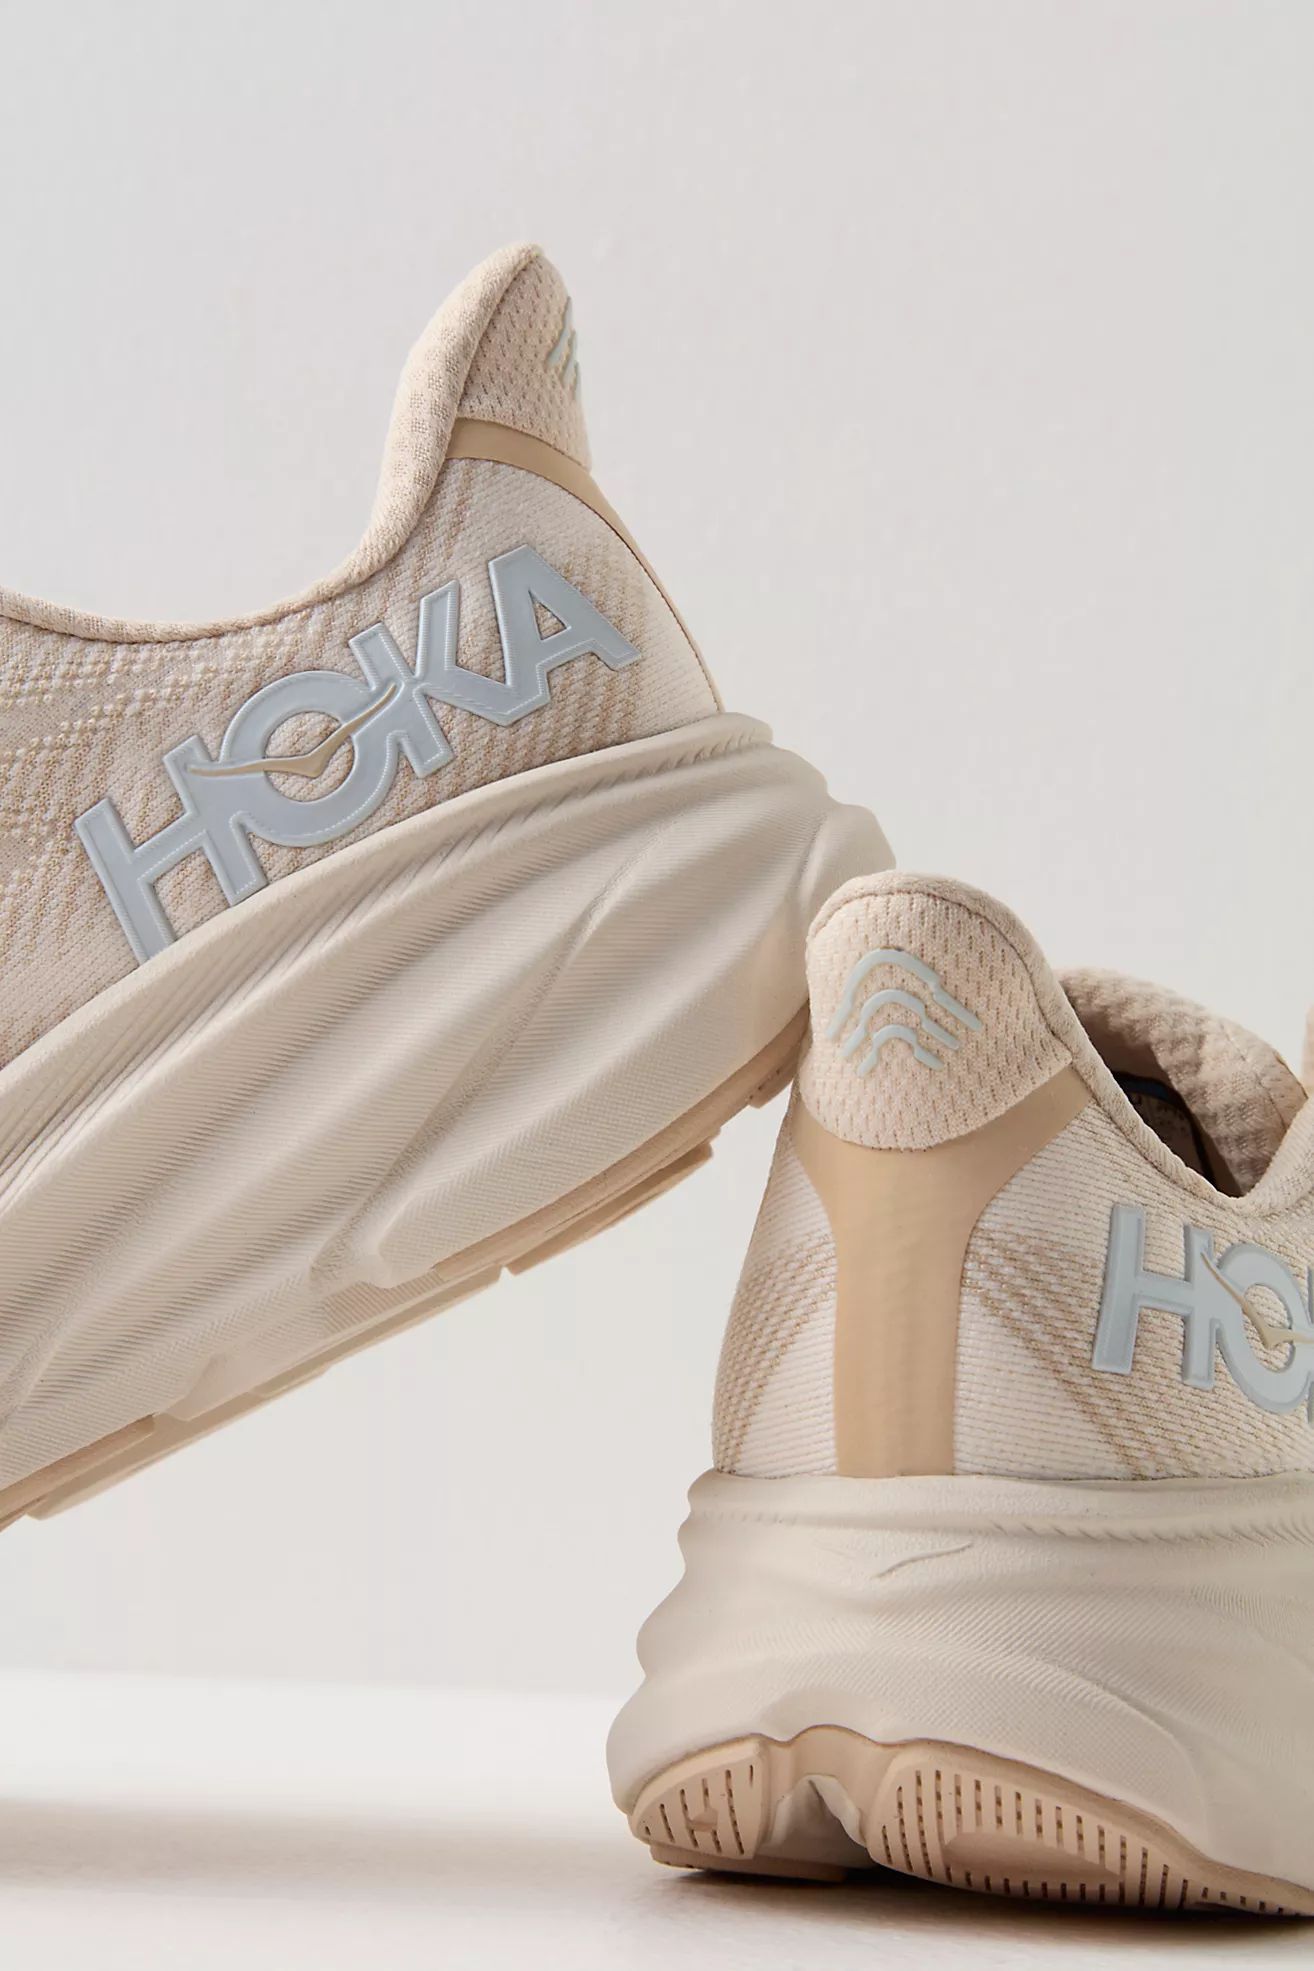 HOKA Clifton 9 Sneakers | Free People (Global - UK&FR Excluded)